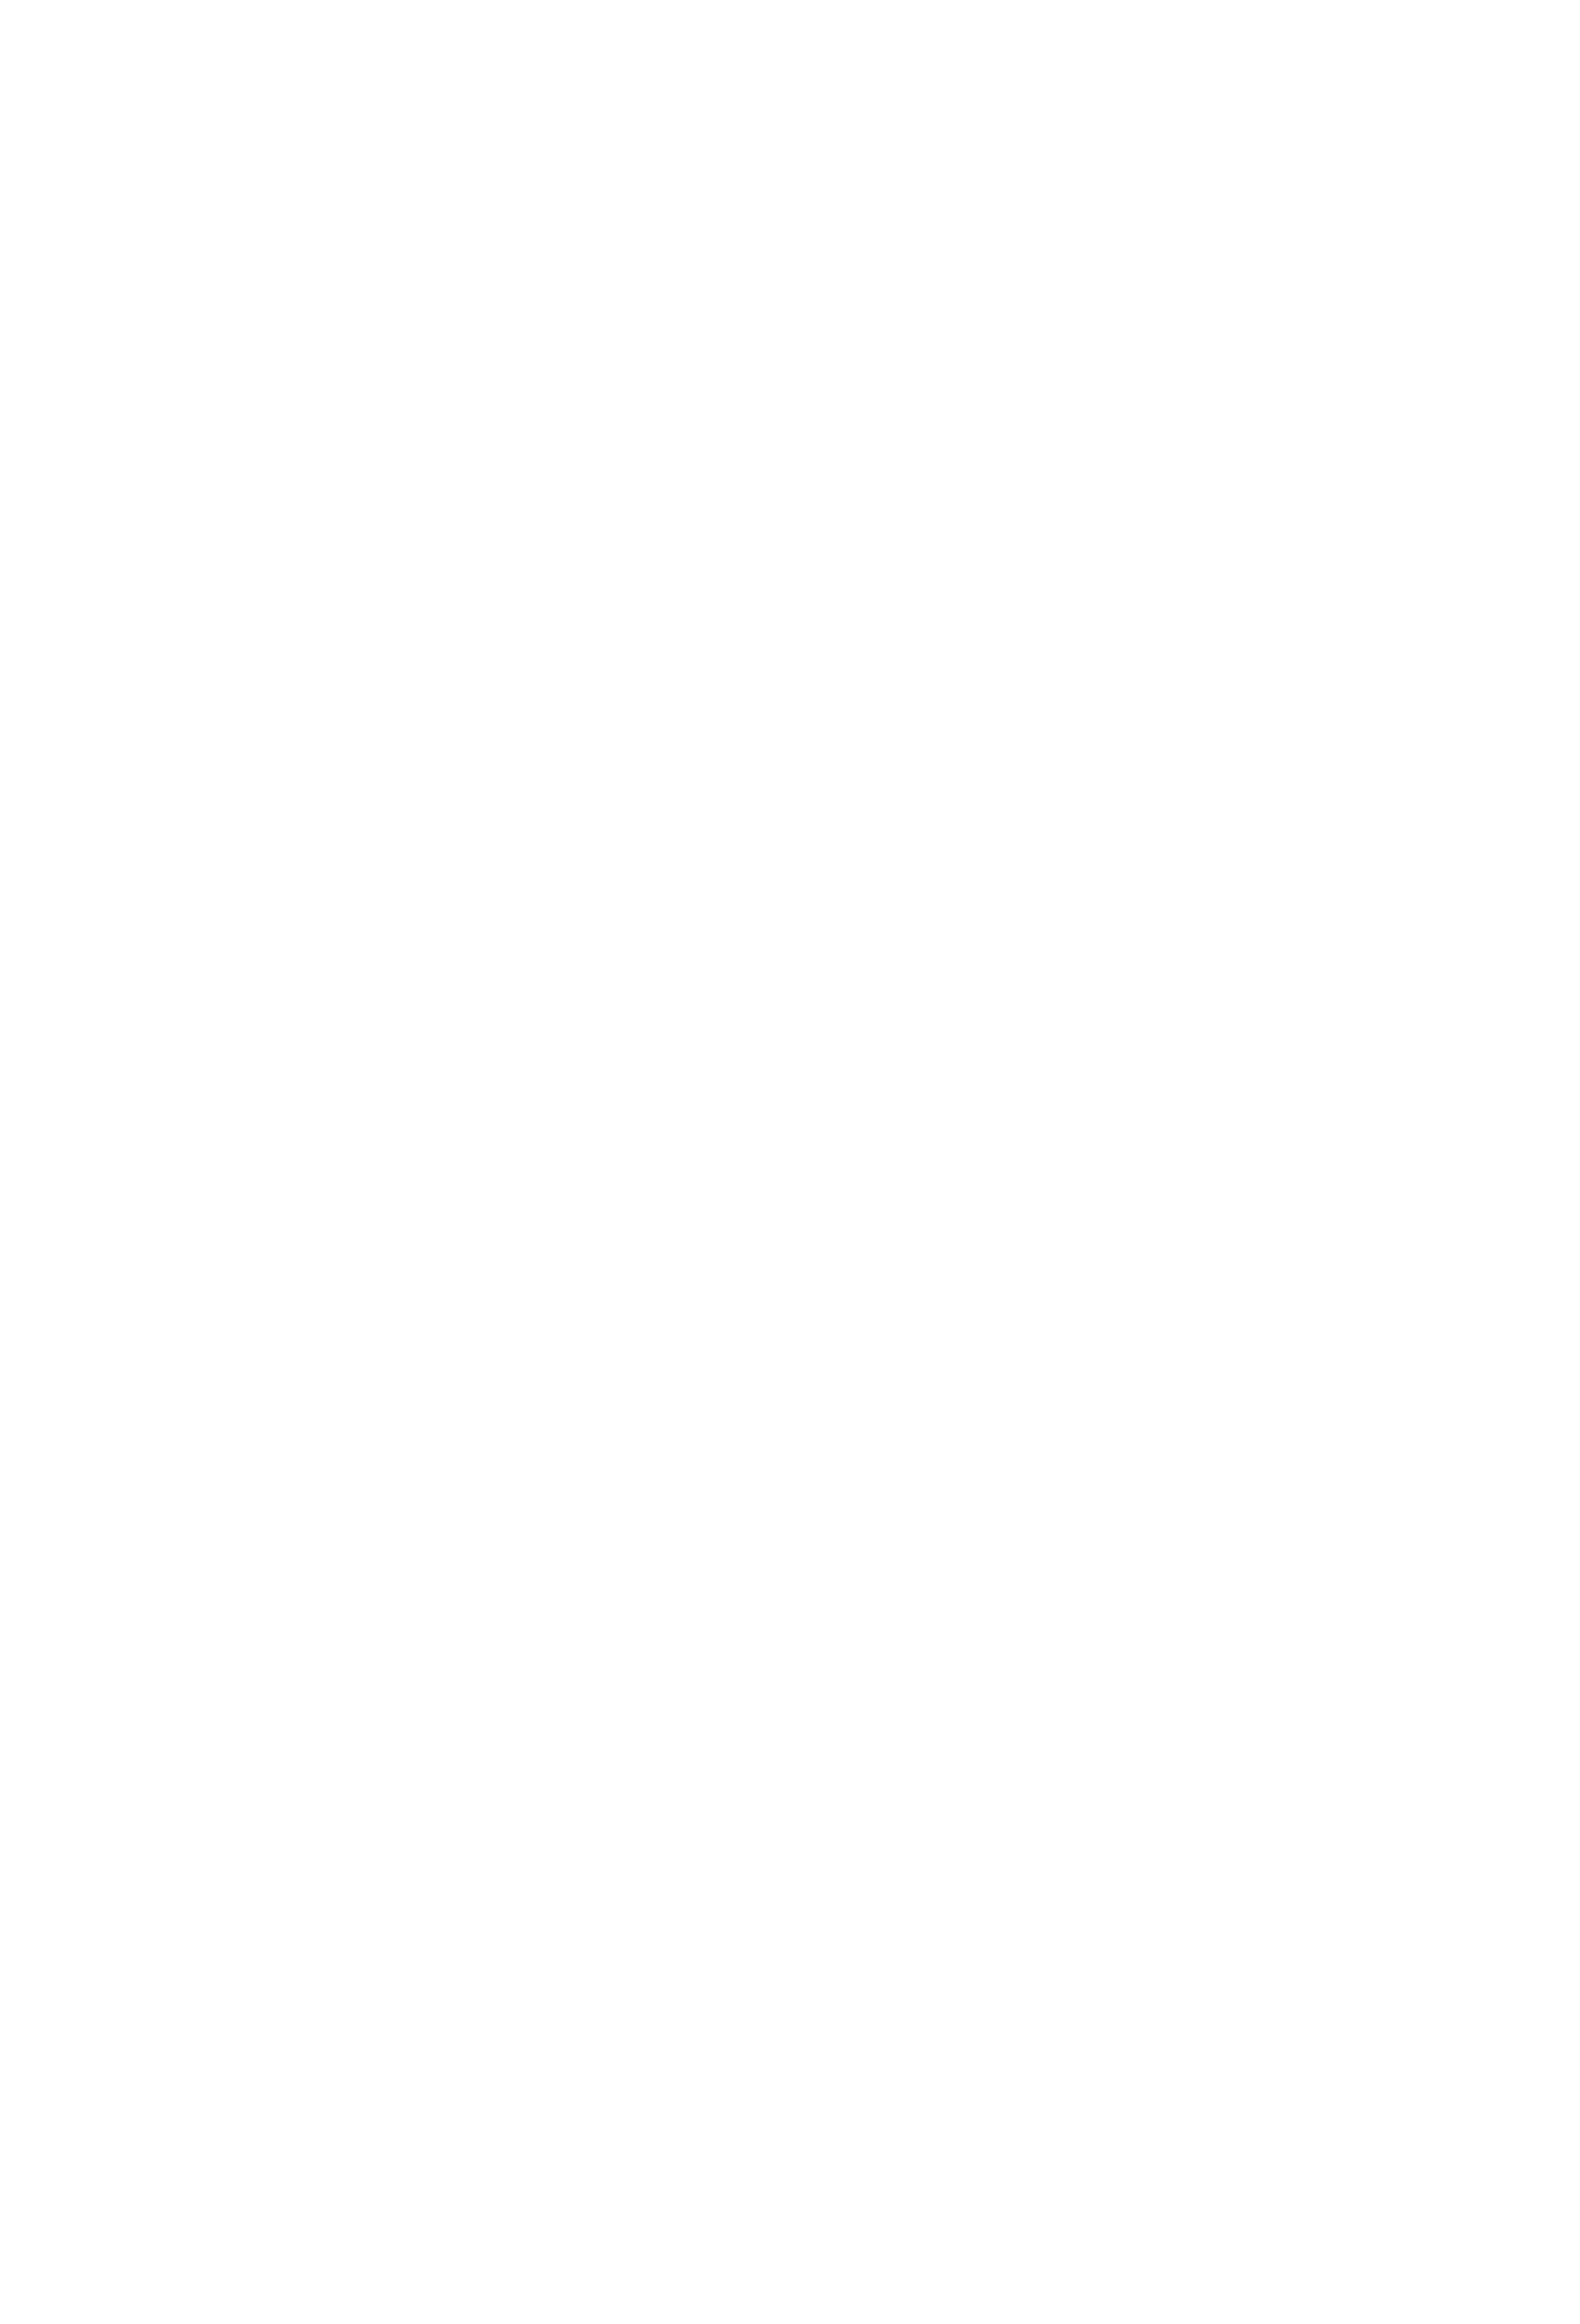 Sedona Shuttle